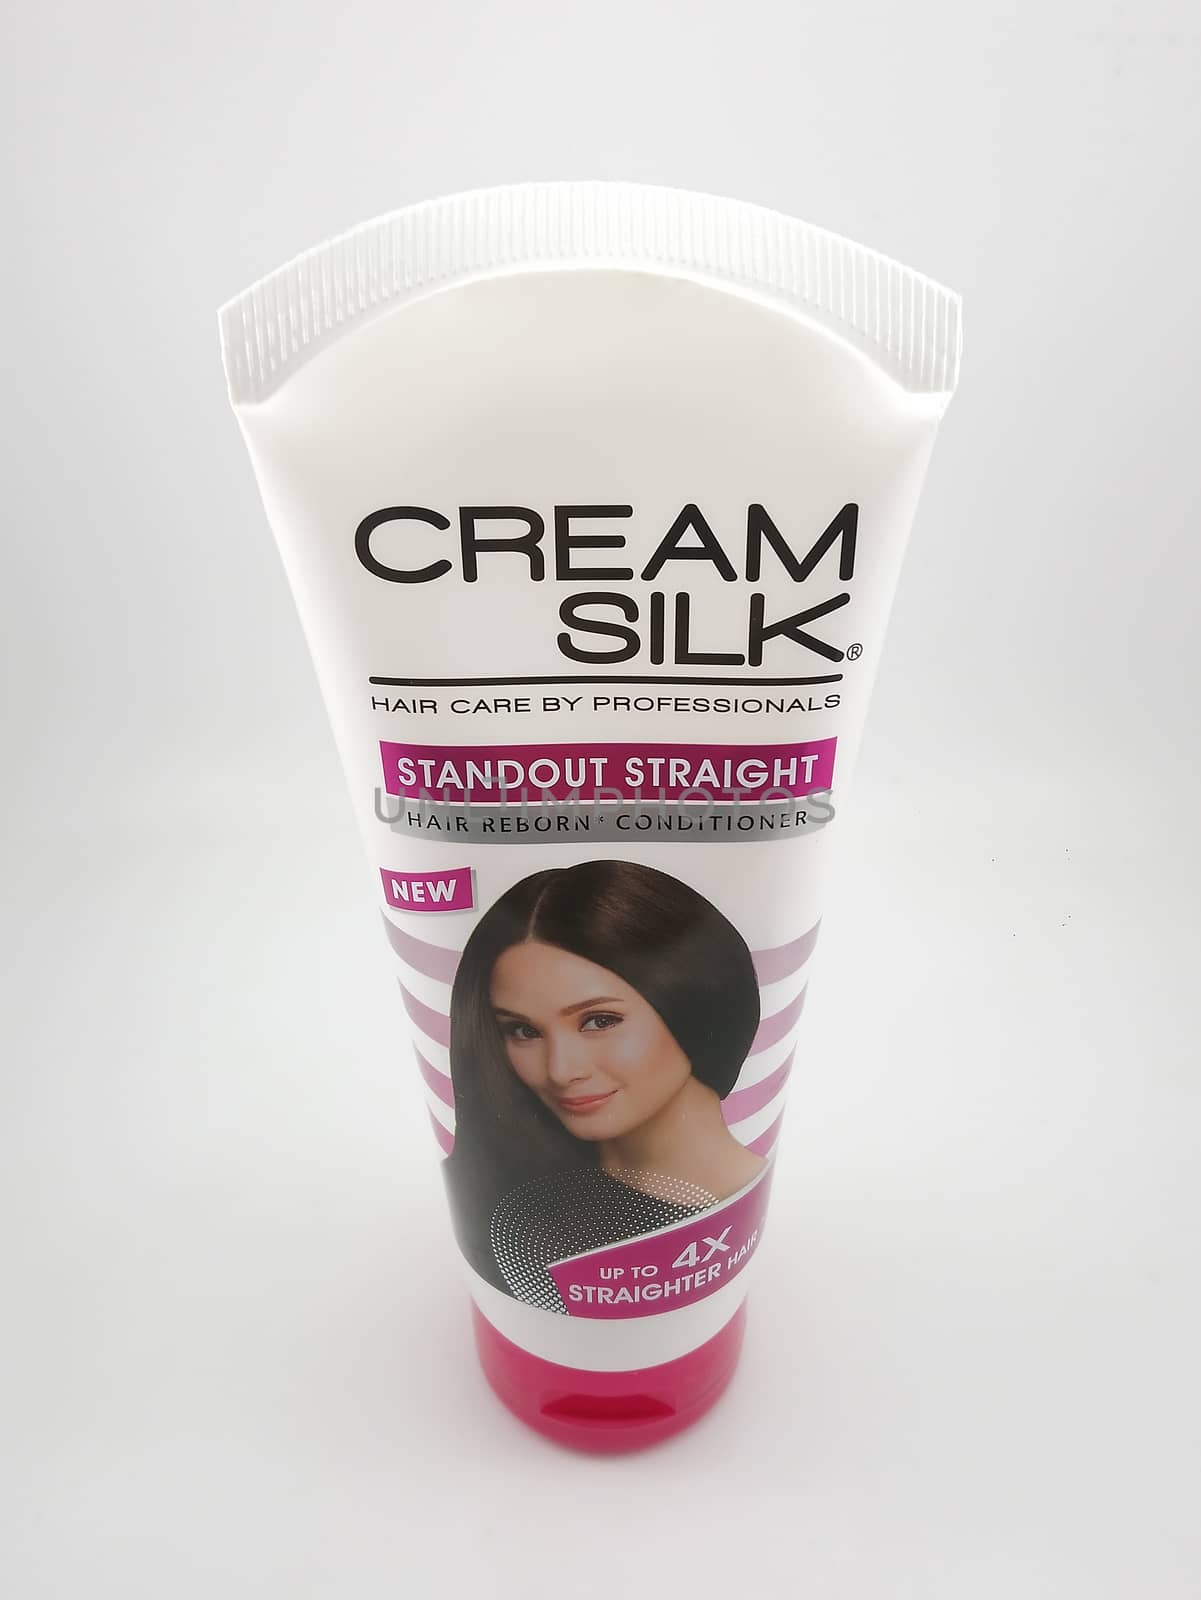 MANILA, PH - SEPT 24 - Cream silk standout straight hair conditioner on September 24, 2020 in Manila, Philippines.